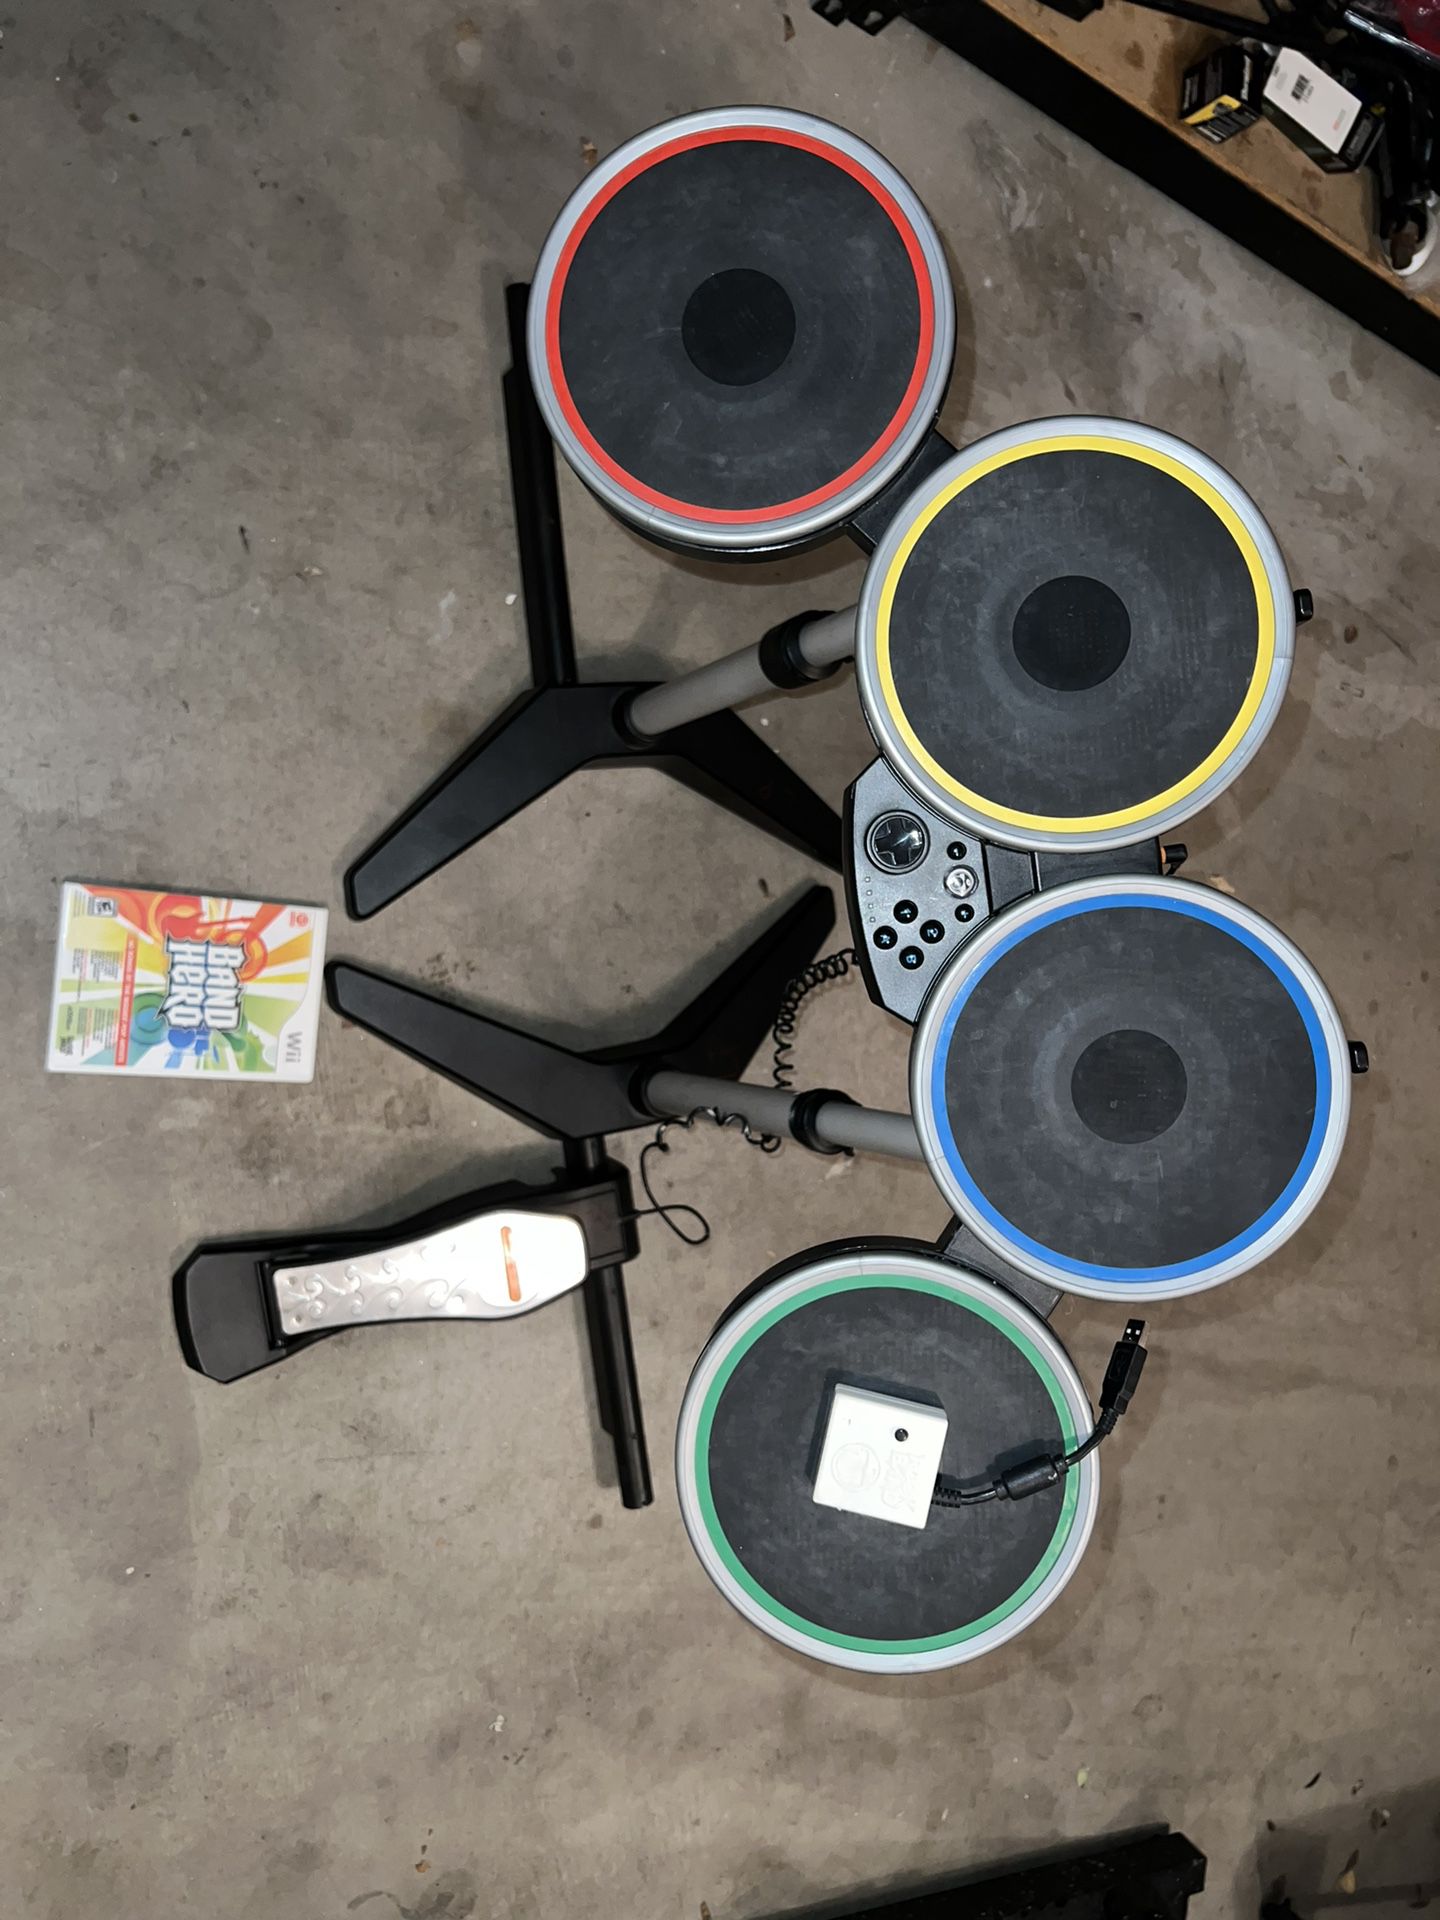 Wii Drum Set With Accessories 